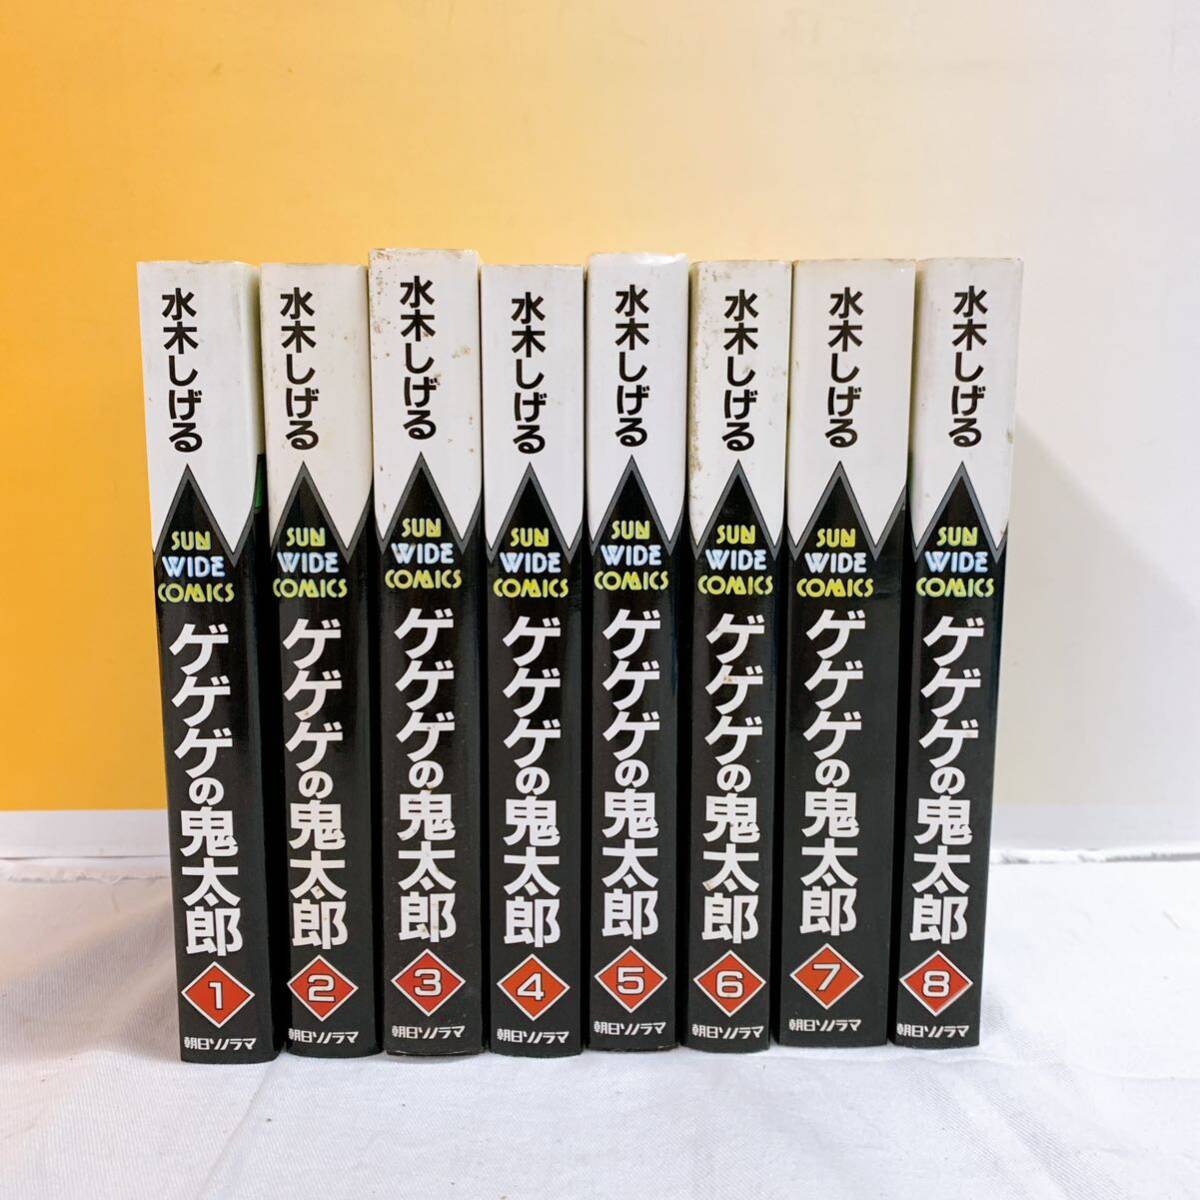 R5-K5/2 GeGeGe no Kintaro all 8 volume water tree ... manga manga wide comics 